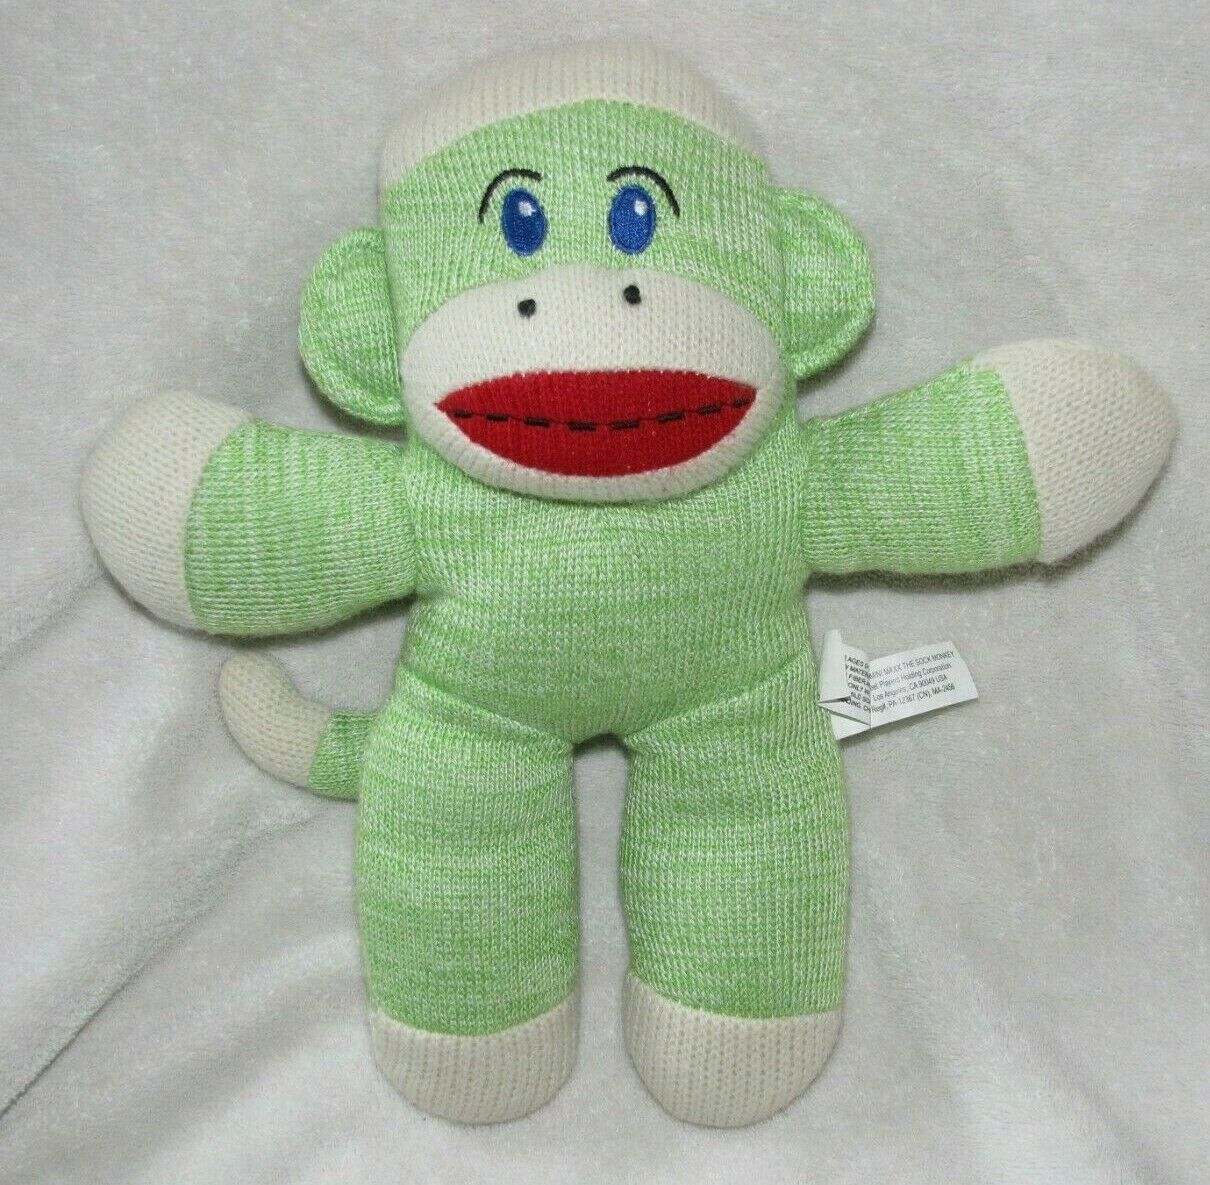 Mini Maxx Stuffed Plush Knit Sweater Green Sock Monkey Animal Doll Toy Rattle - $29.69